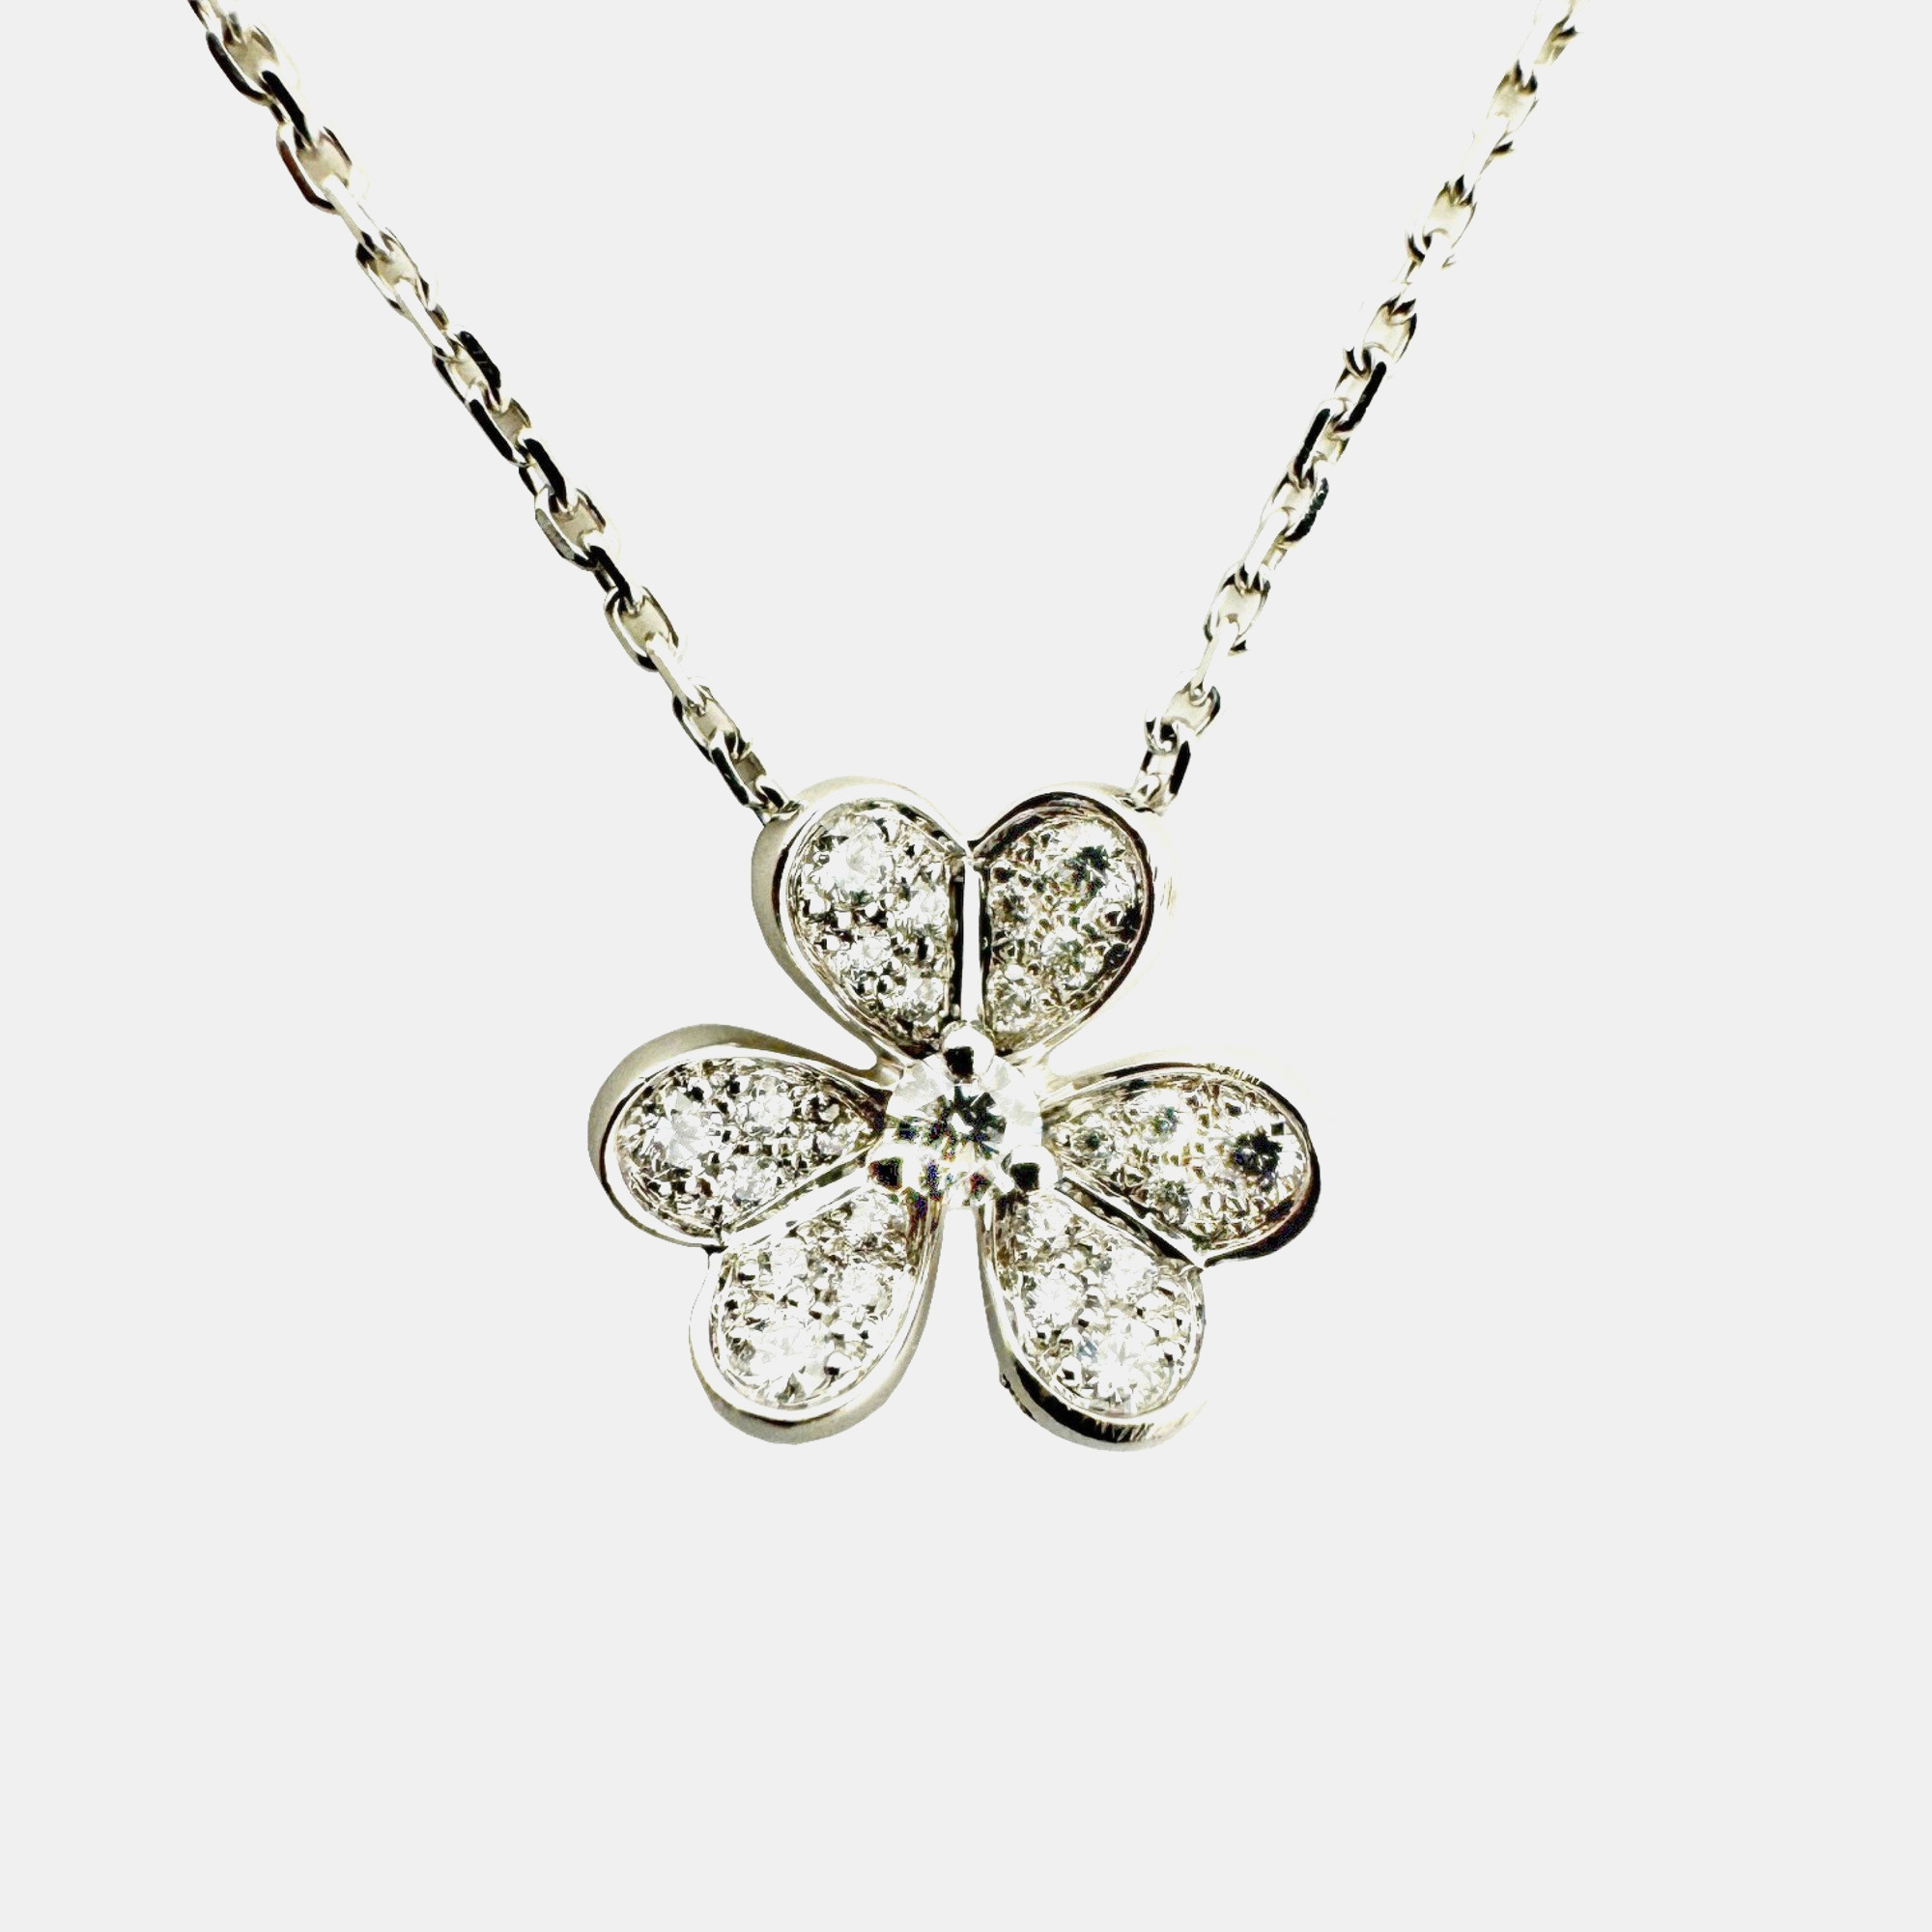 Van cleef & arpels 18k white gold and diamond frivole pendant necklace